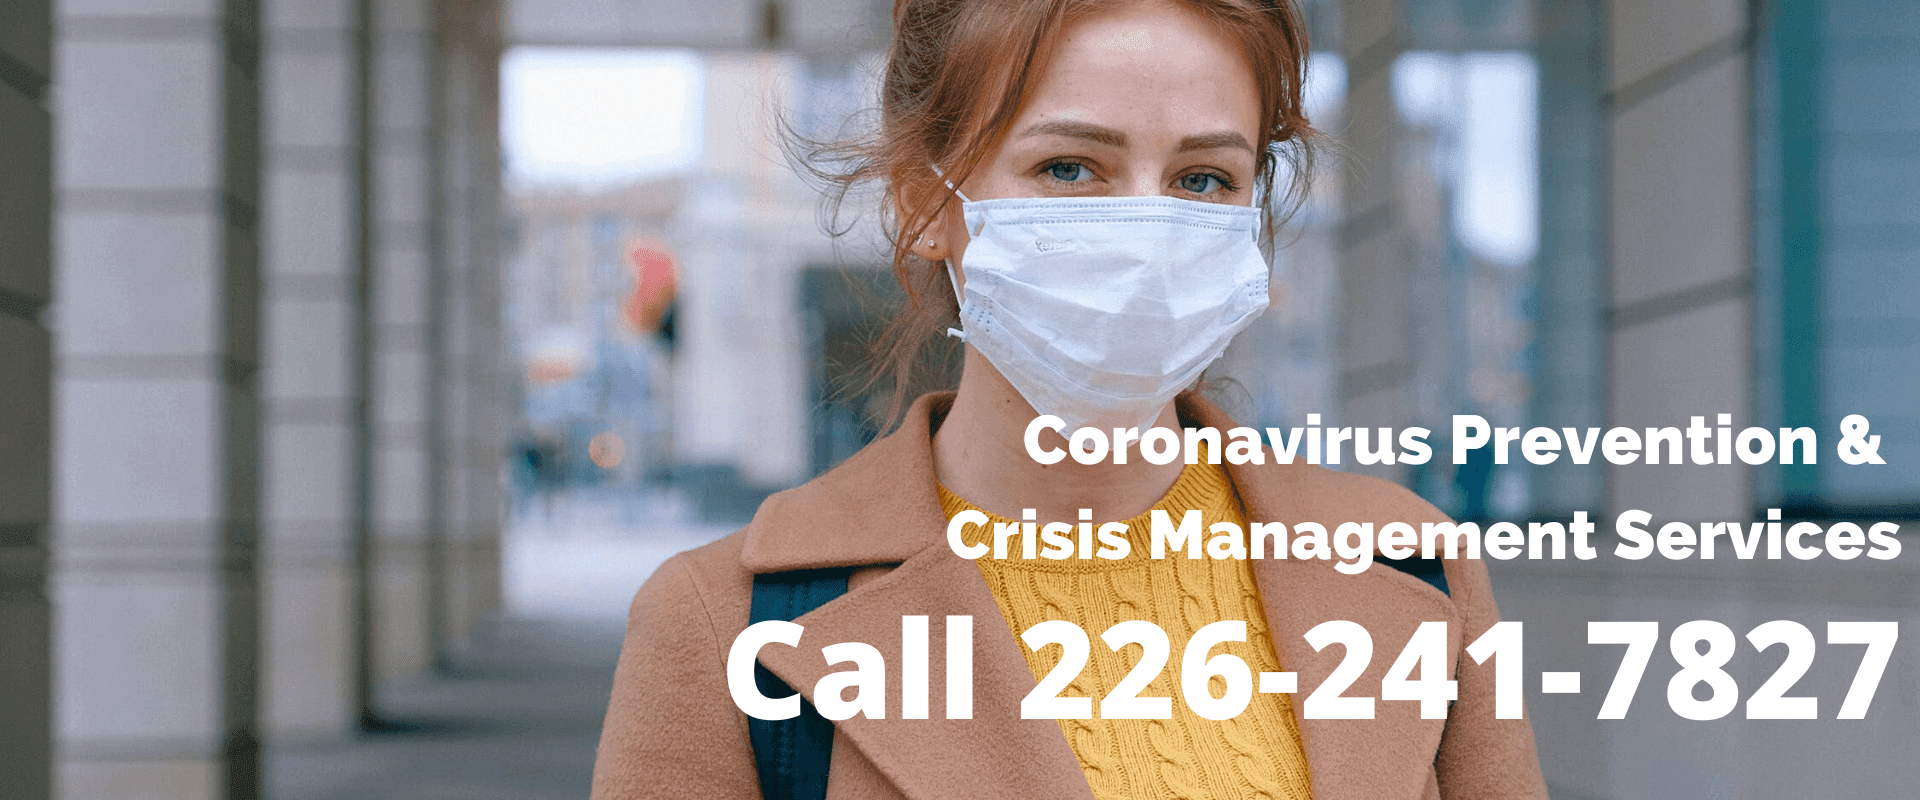 Coronavirus Prevention & Crisis Management Services